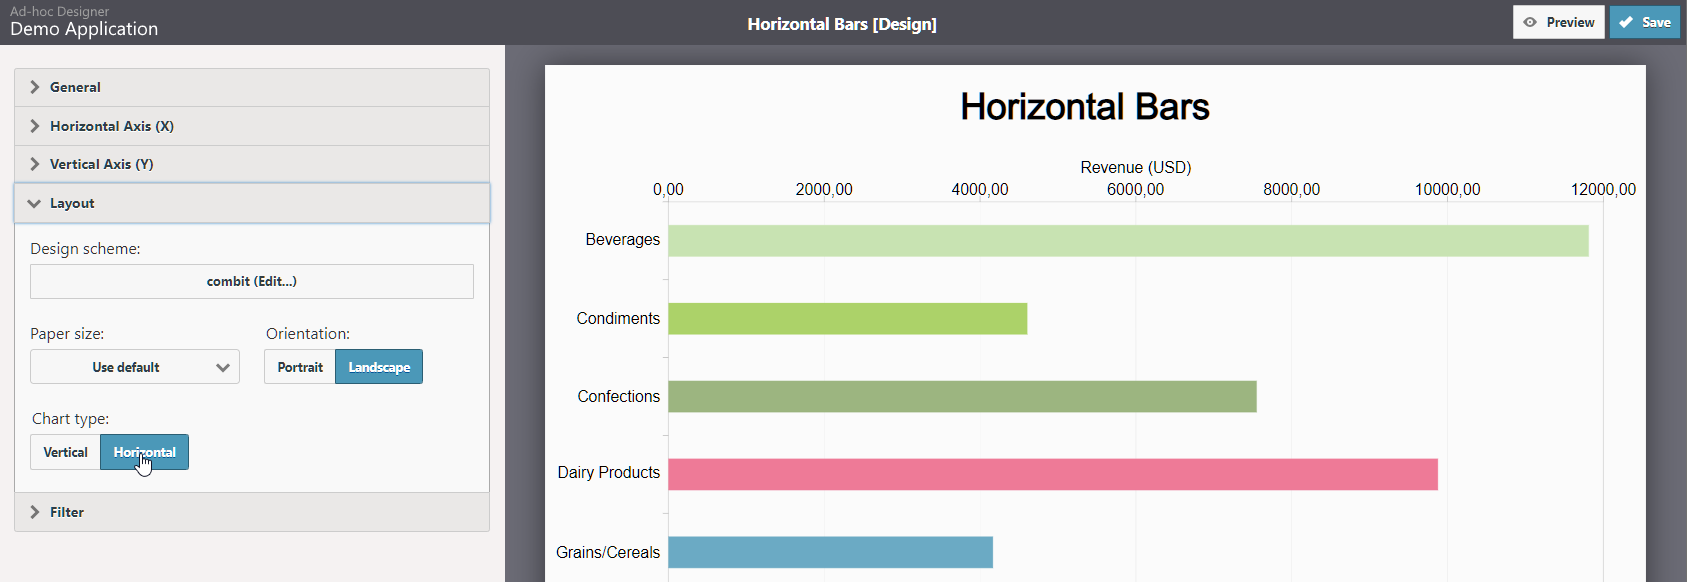 Ad-hoc Designer Bar Charts